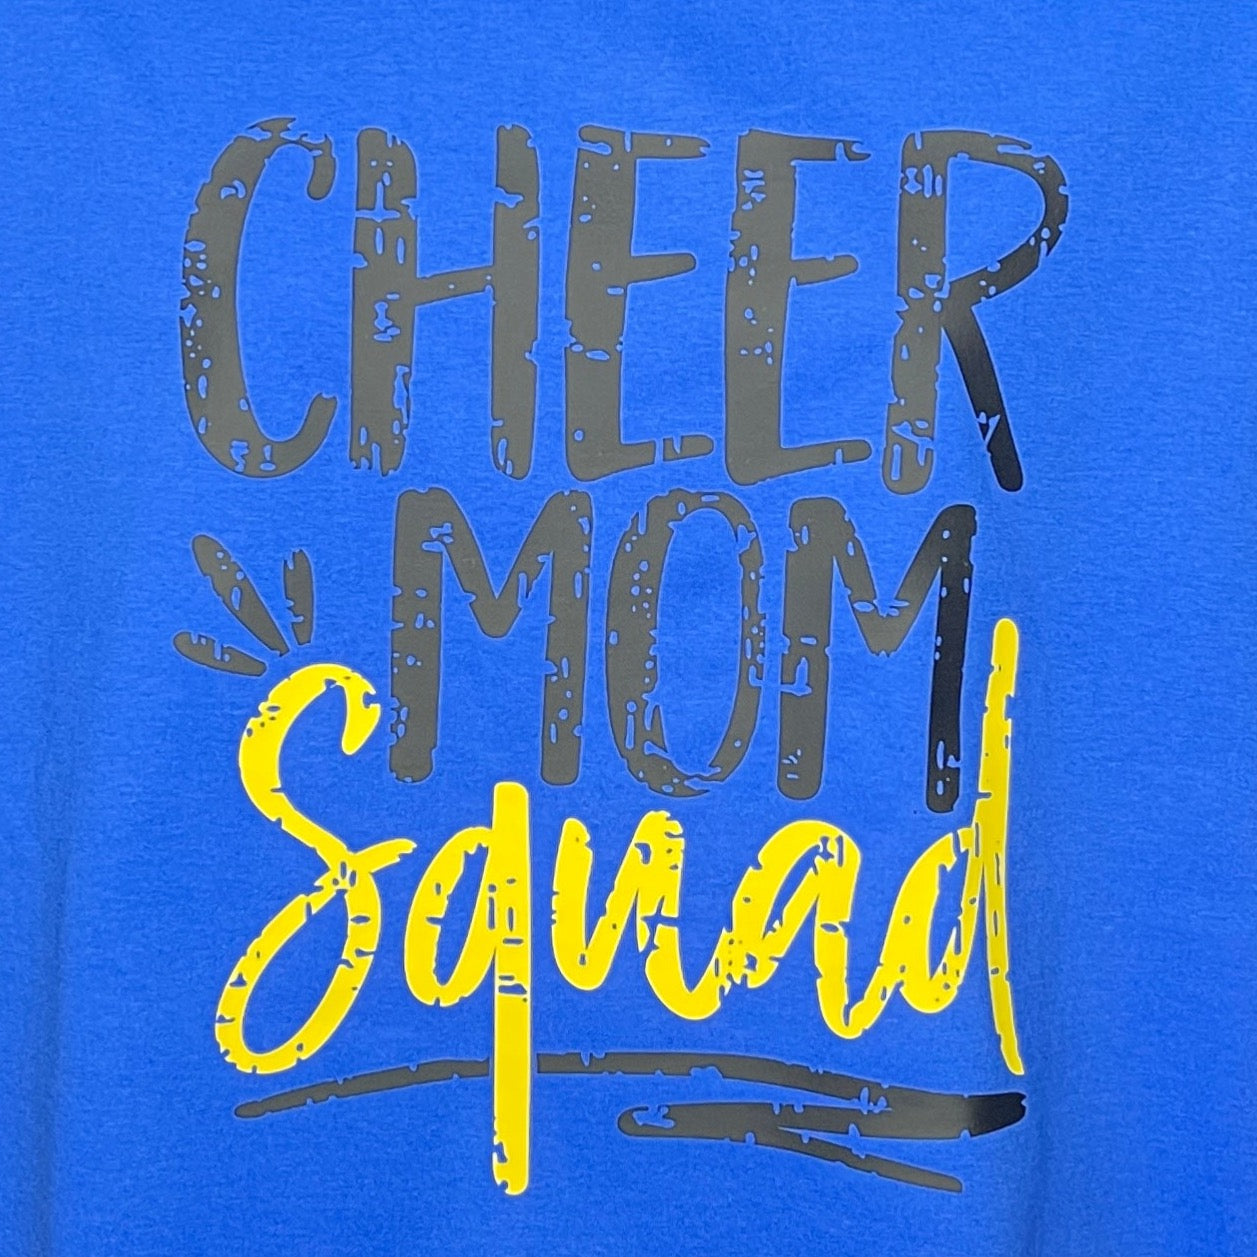 Cheer mom squad